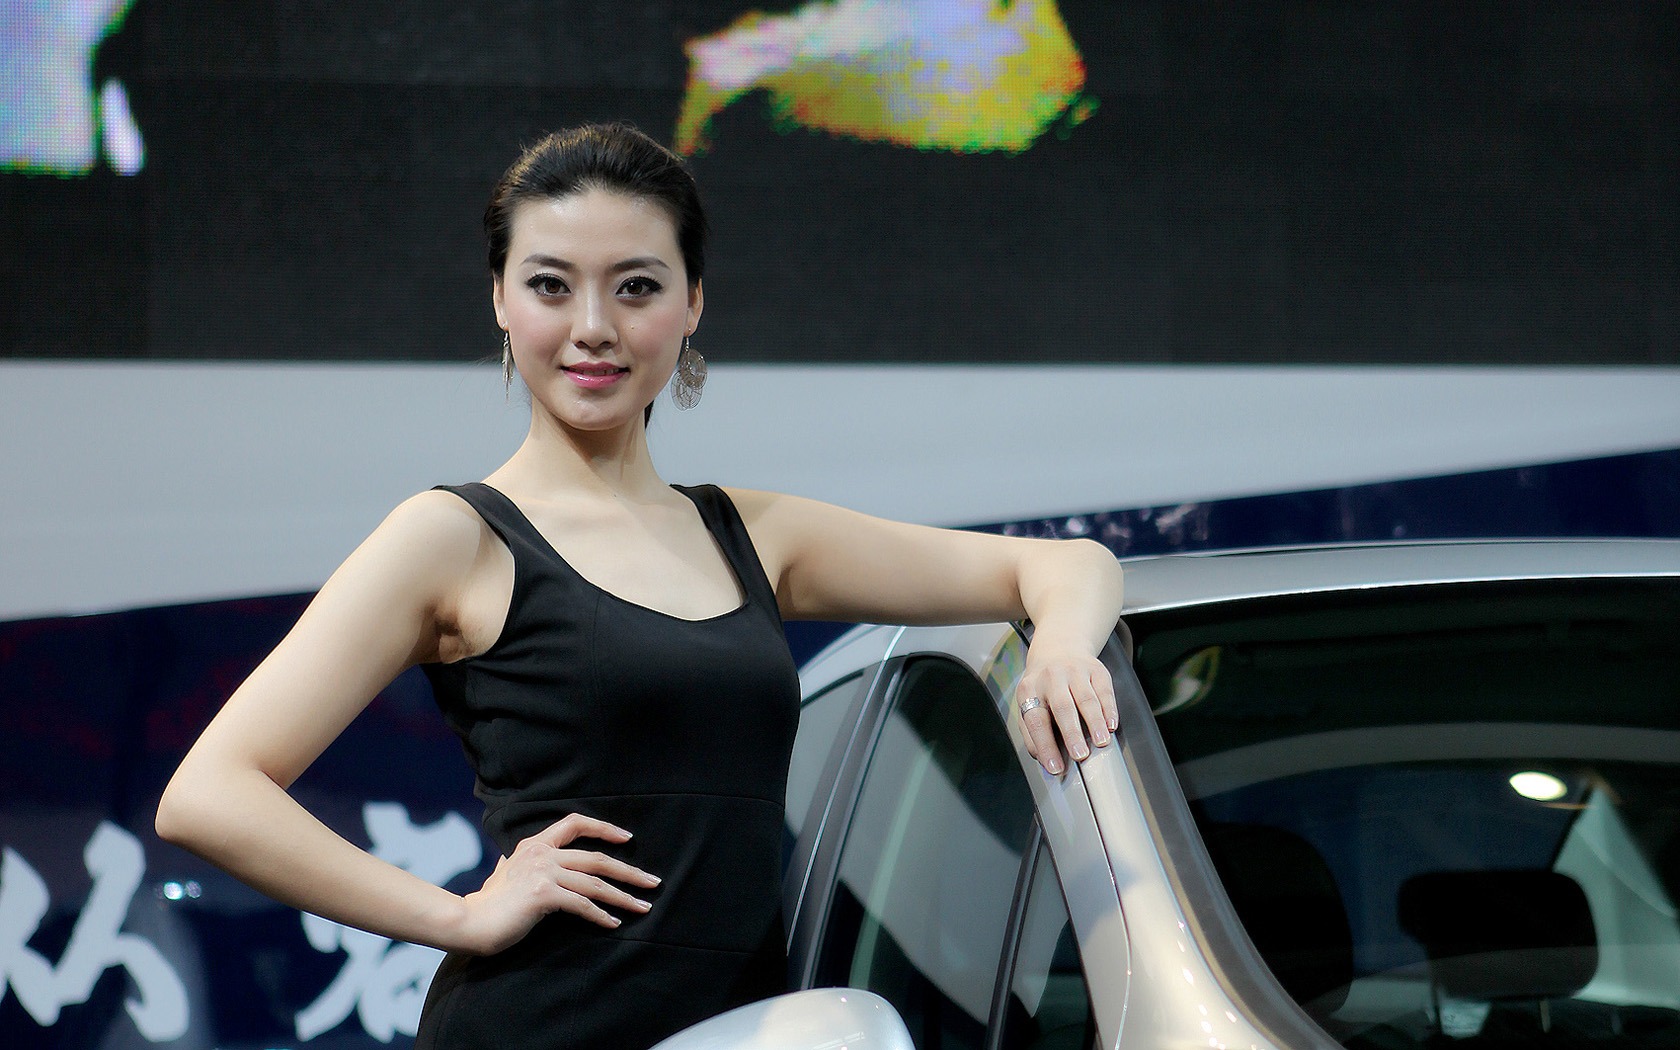 2010 Peking autosalonu modely aut odběrem (2) #10 - 1680x1050